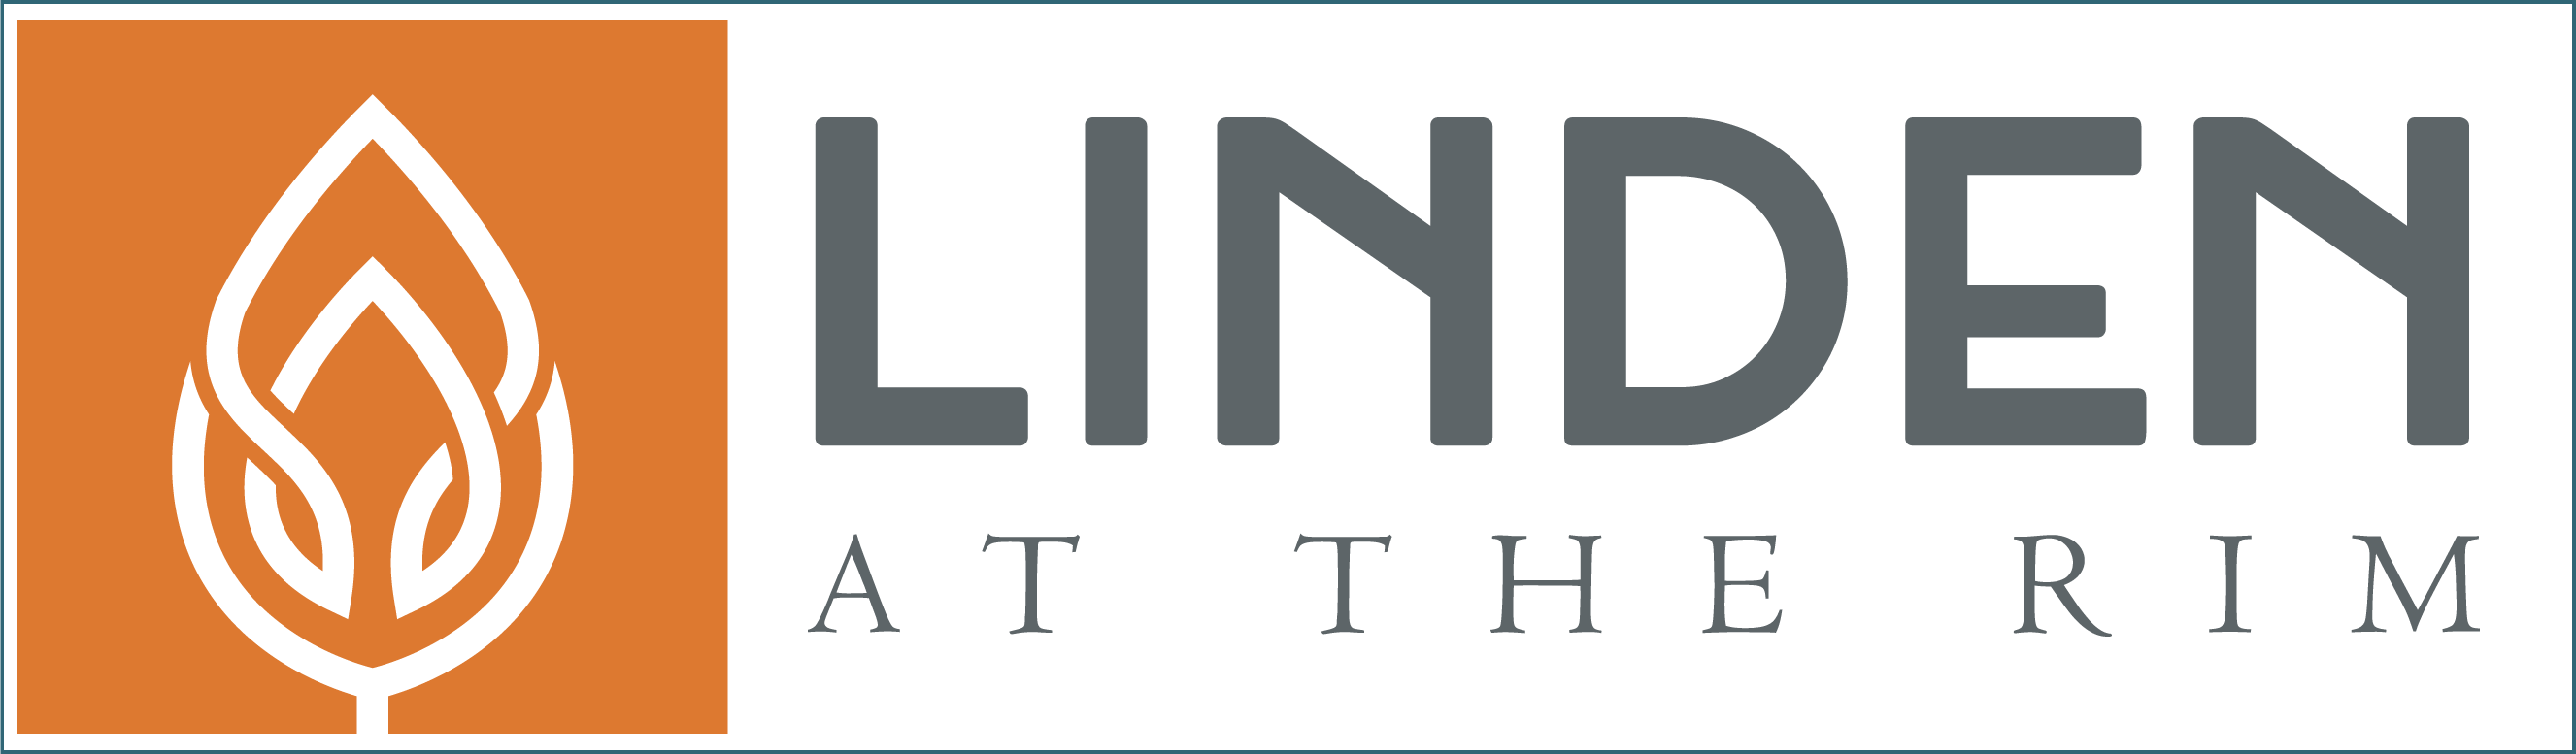 Linden The Rim Logo